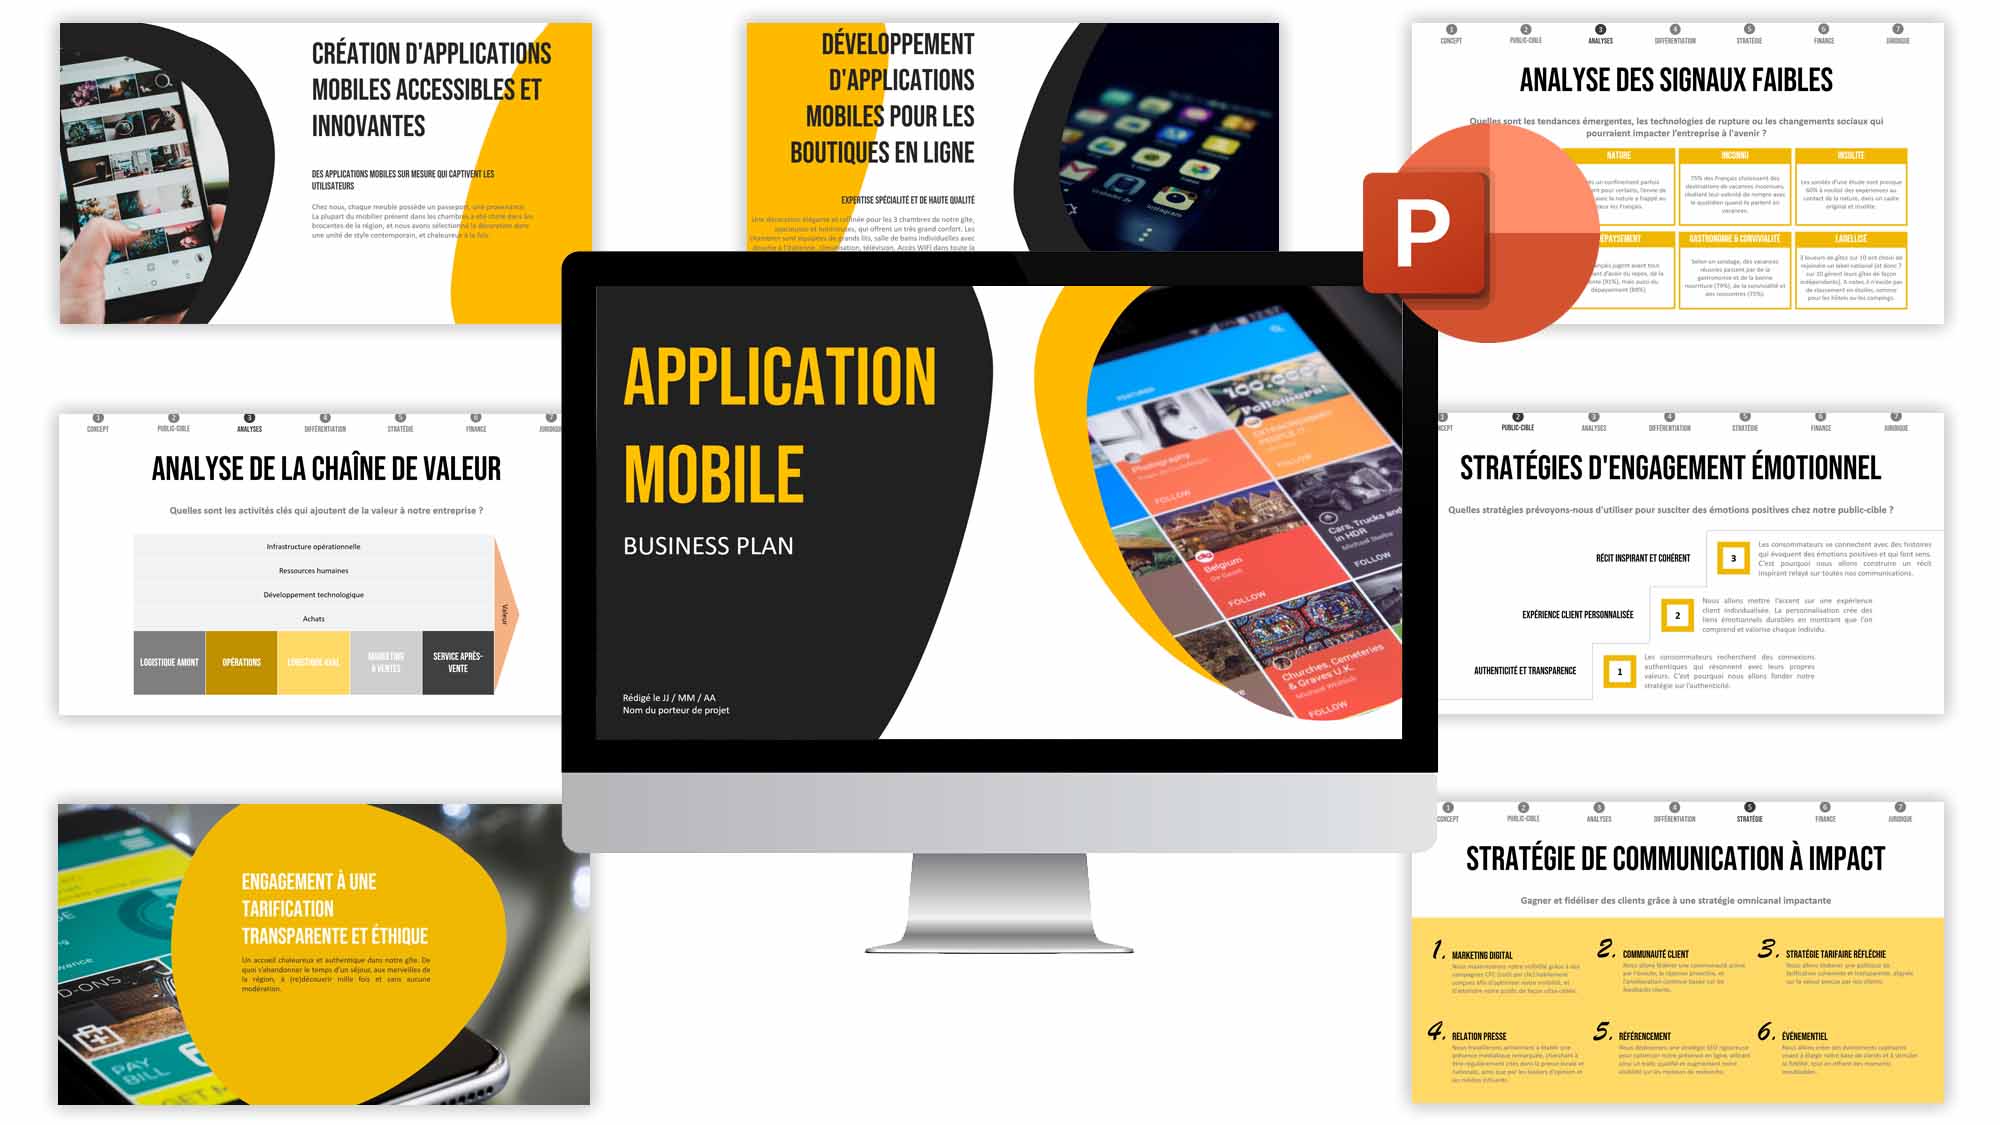 modele business plan application mobile